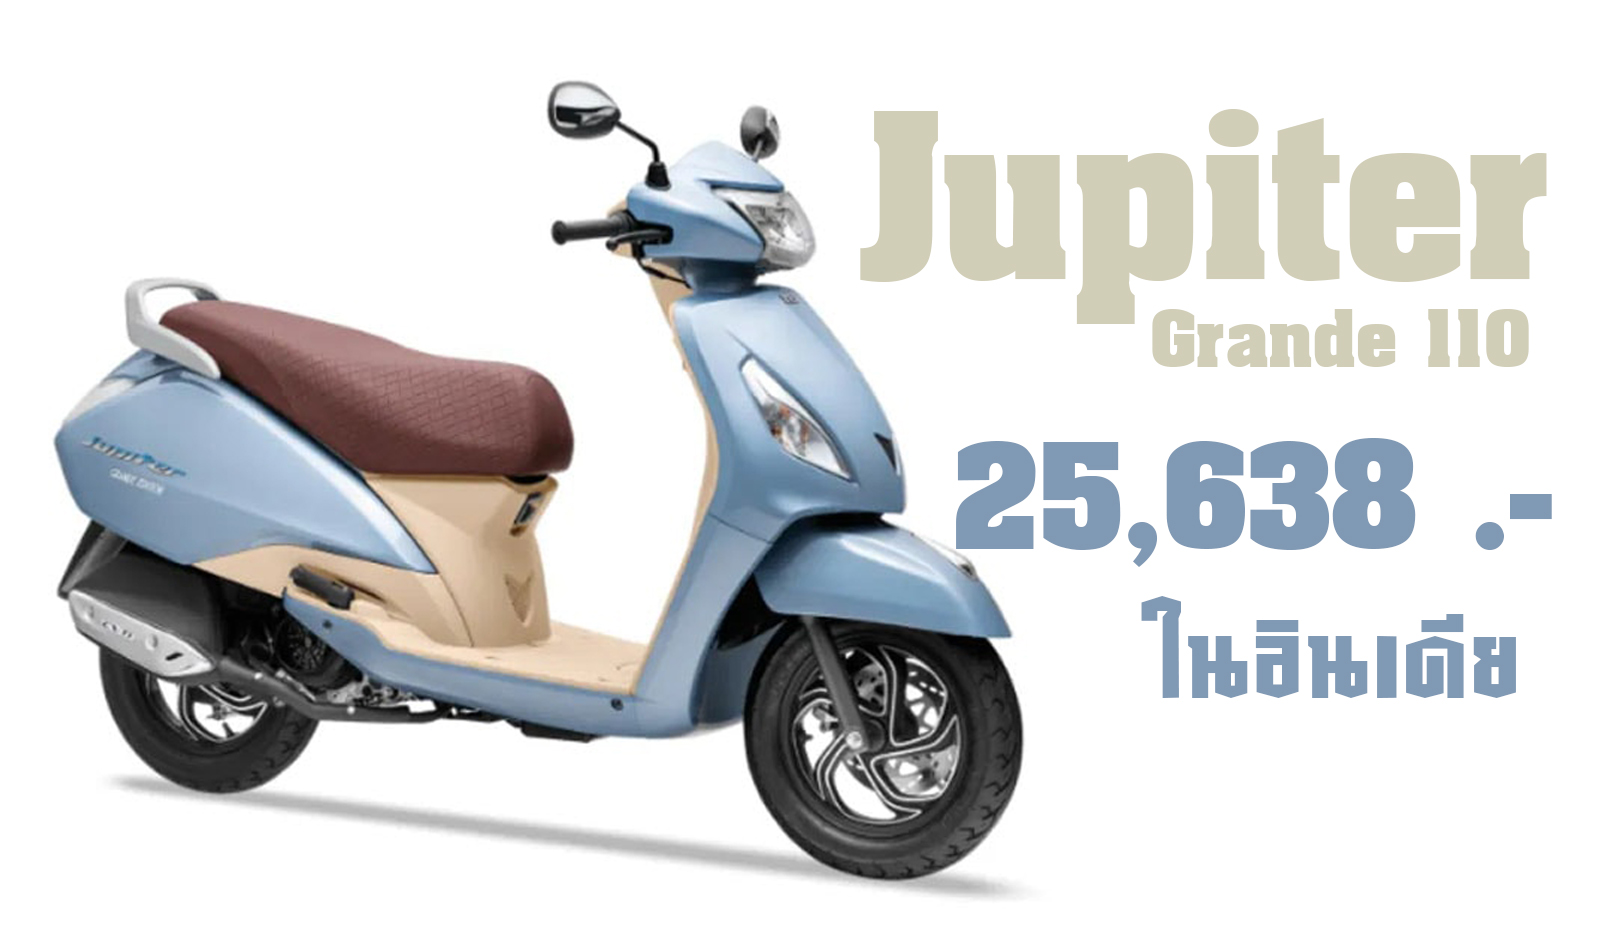 TVS Jupiter Grande 110 เคาะราคา 25,638 บาท ในอินเดีย